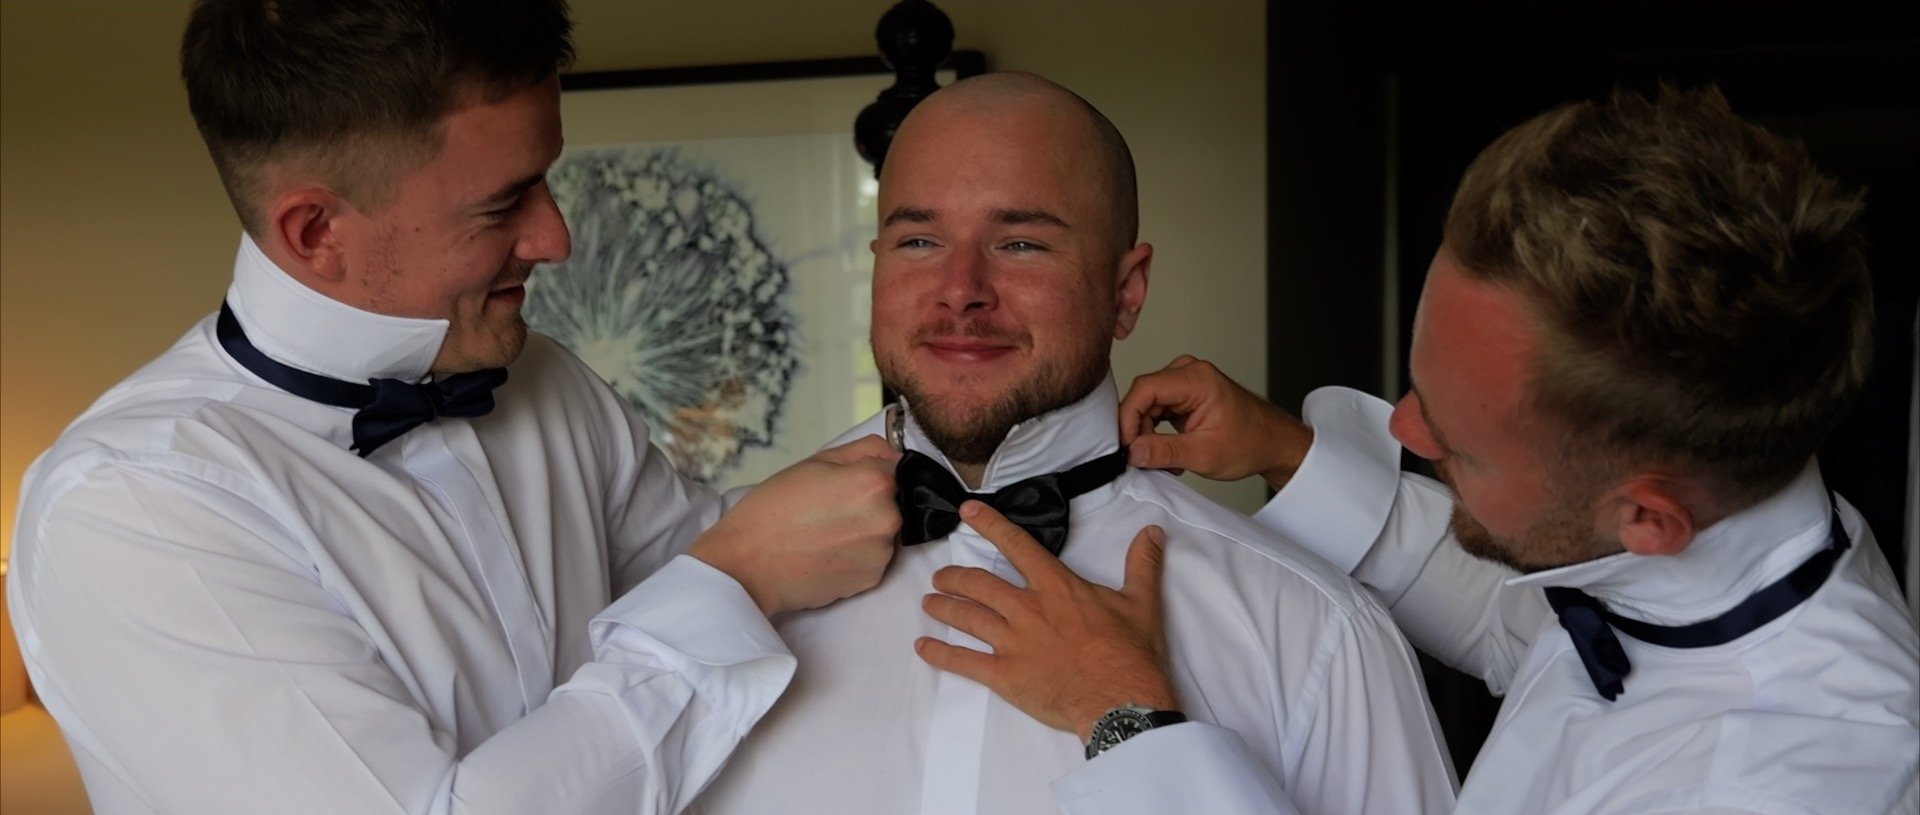 Sopwell House wedding videography - 3 Cheers Media - groom prep.jpg